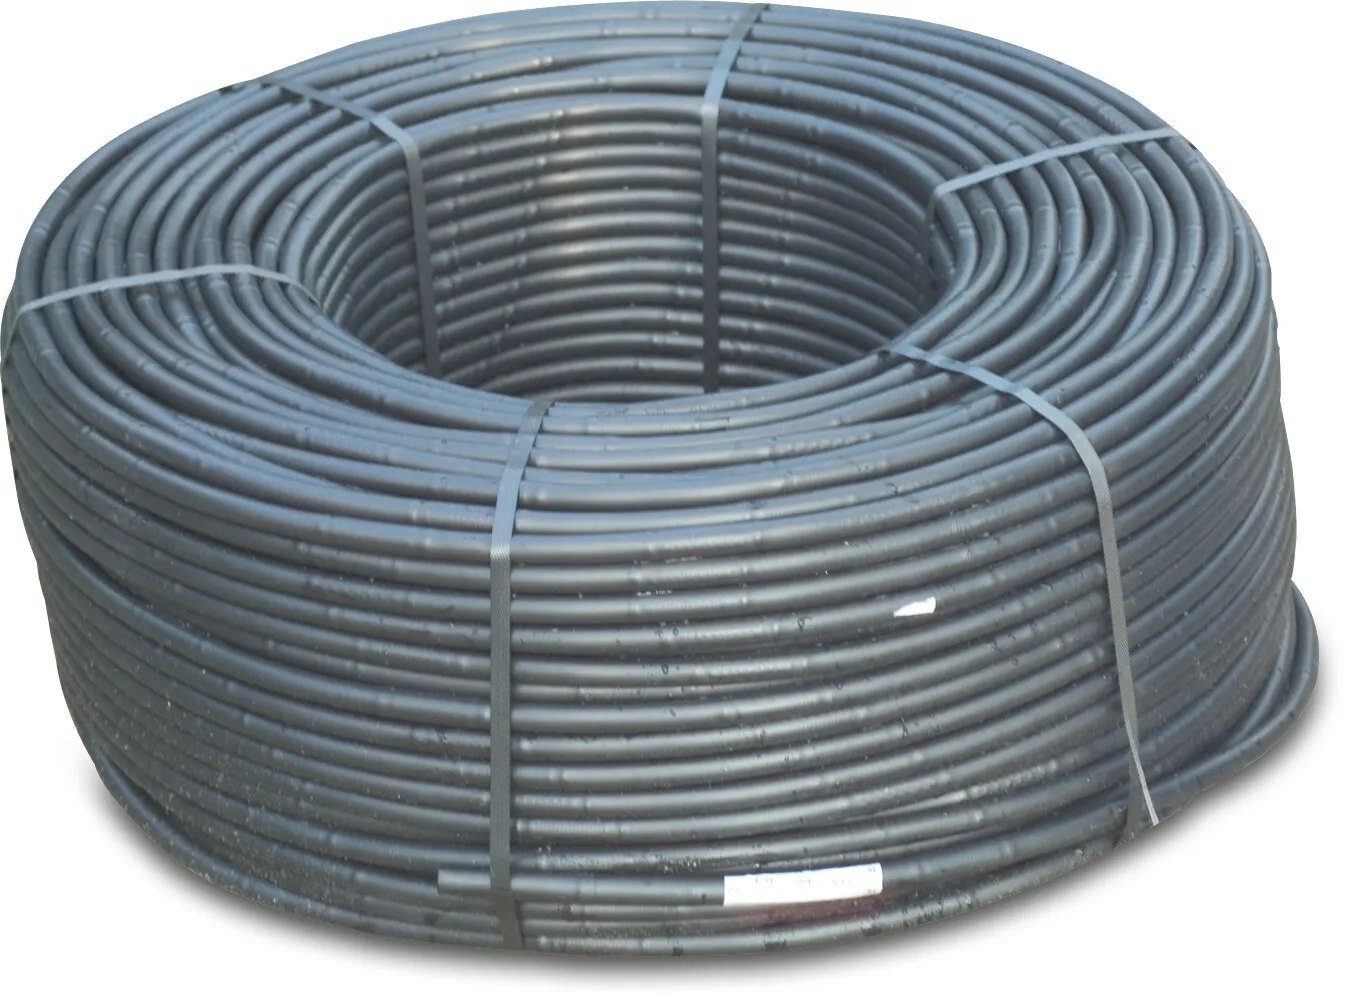 NaanDanJain Drip irrigation hose PE 20 mm x 1.0 mm 2.3ltr/h 50cm black 300m type PC inline